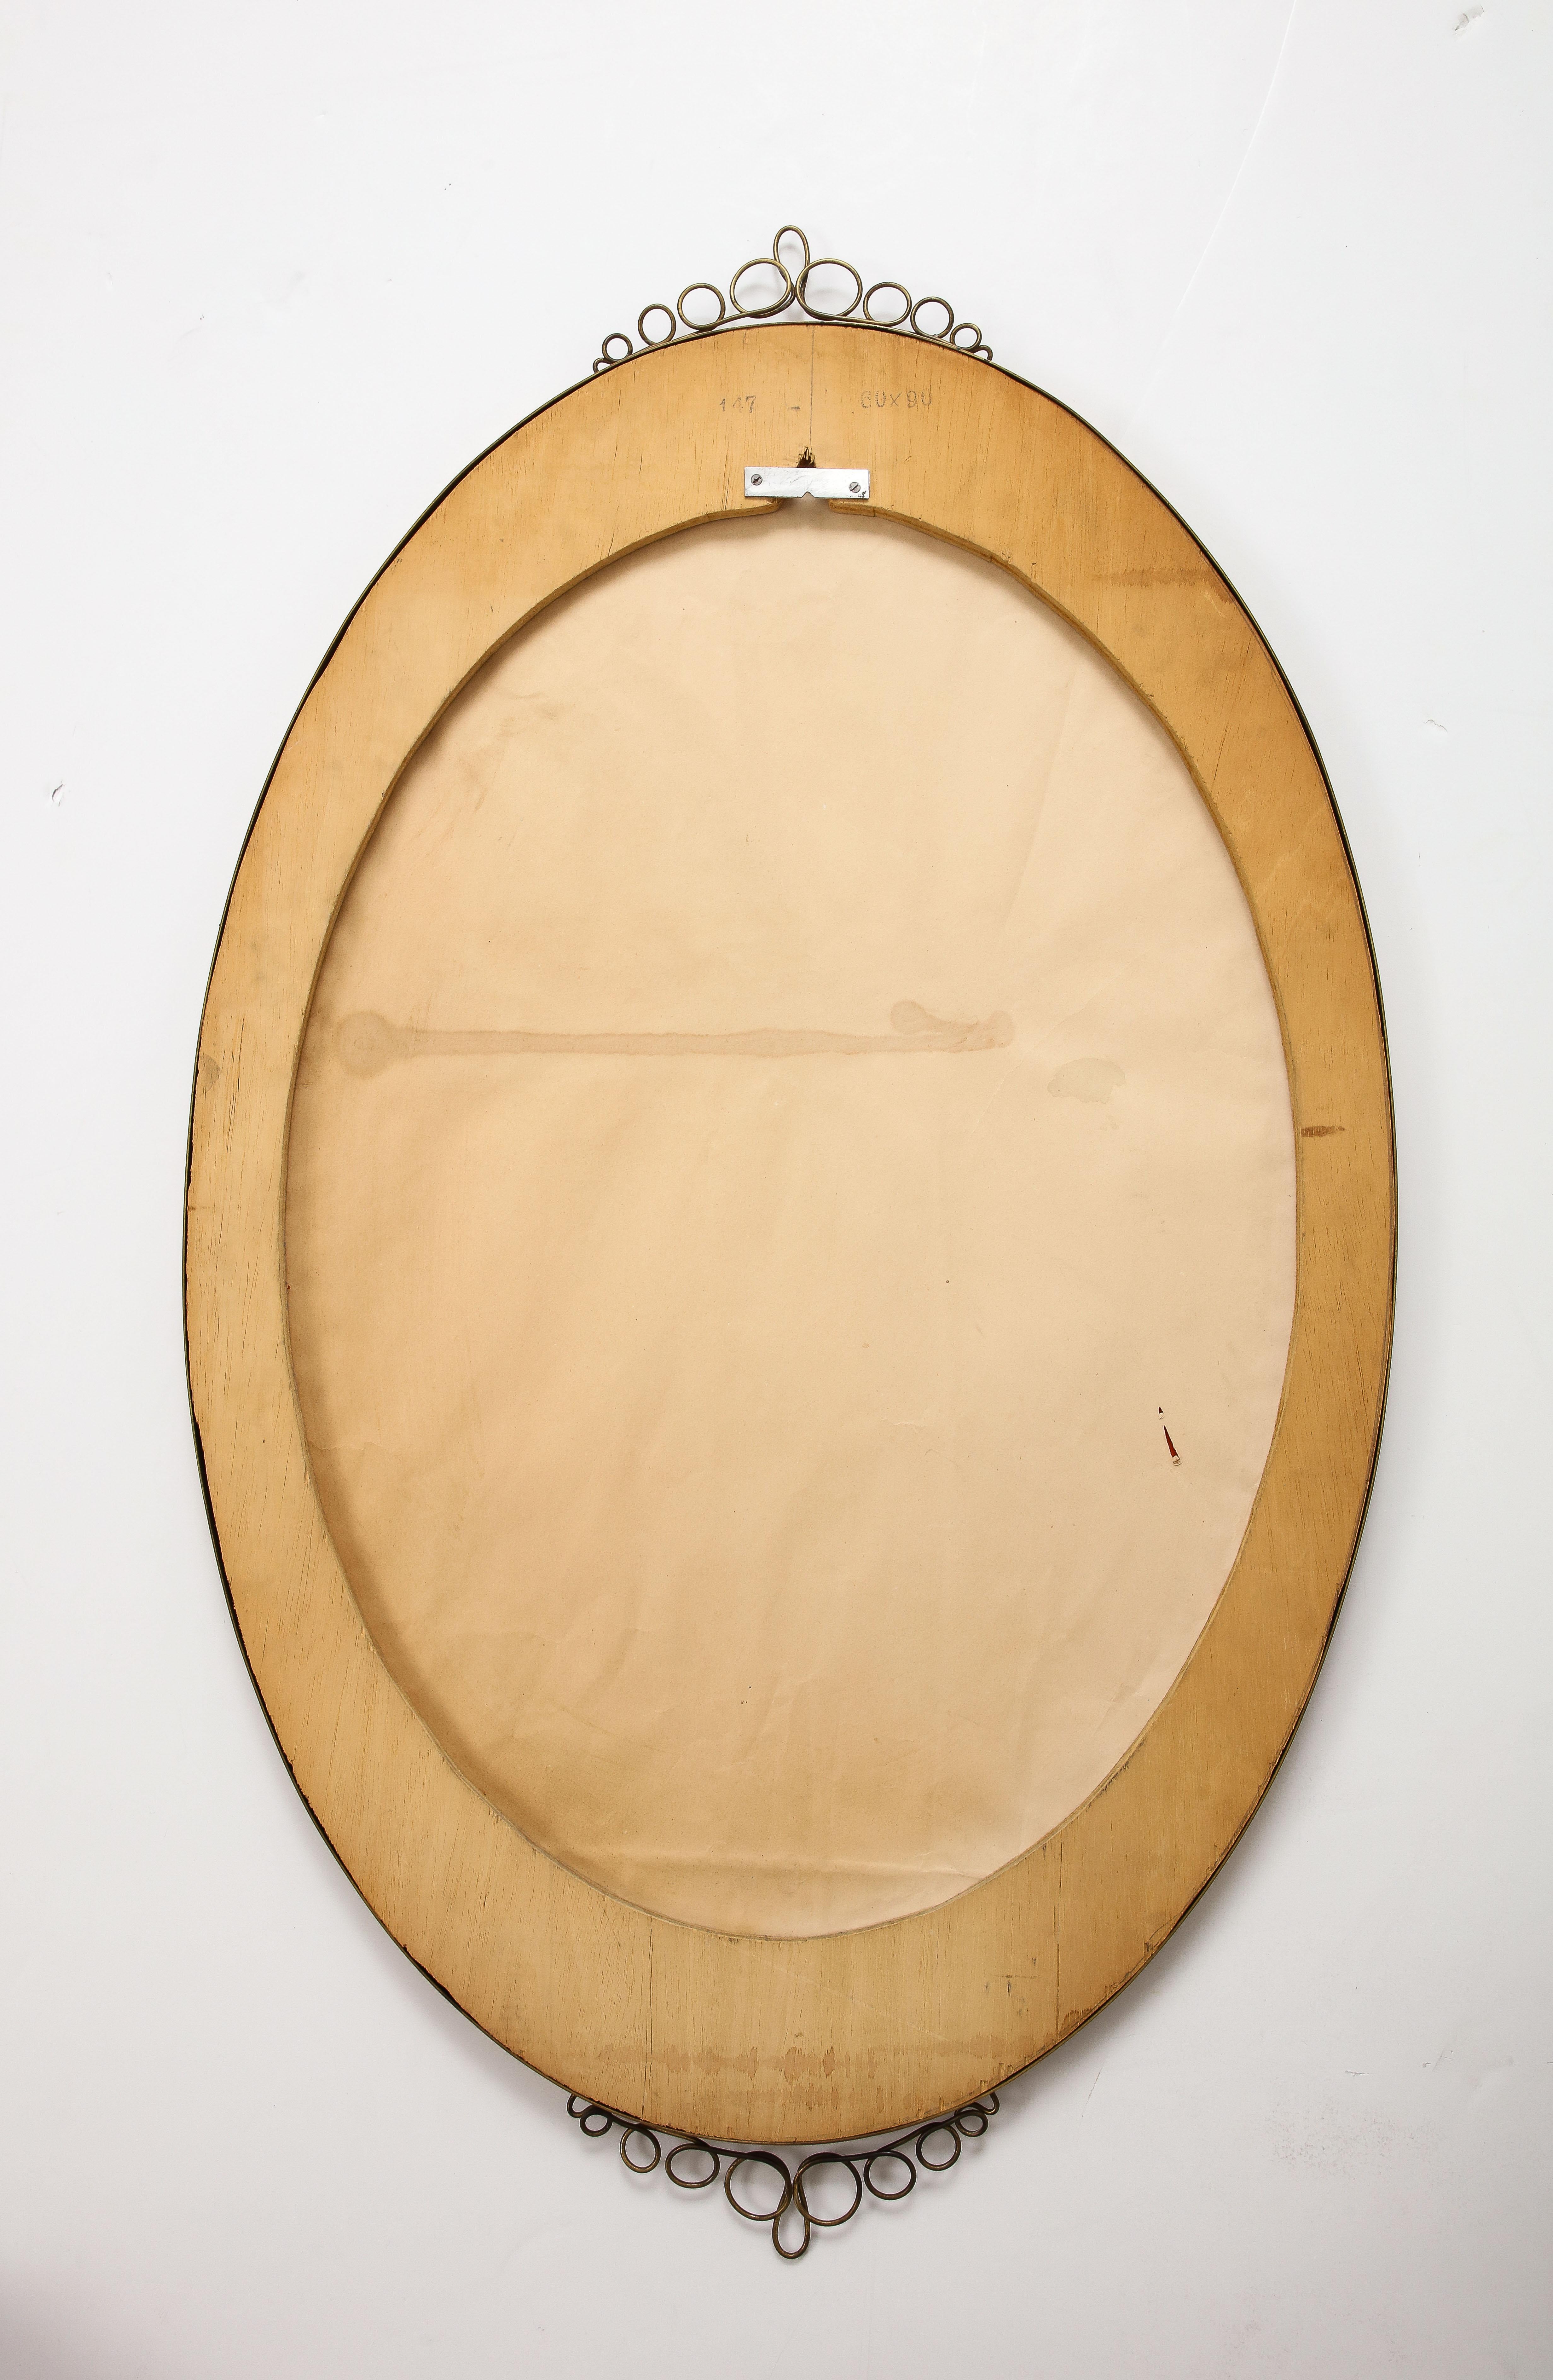 1960s Italian Modernist Oval Brass Wall Mirror with Scrolls 2